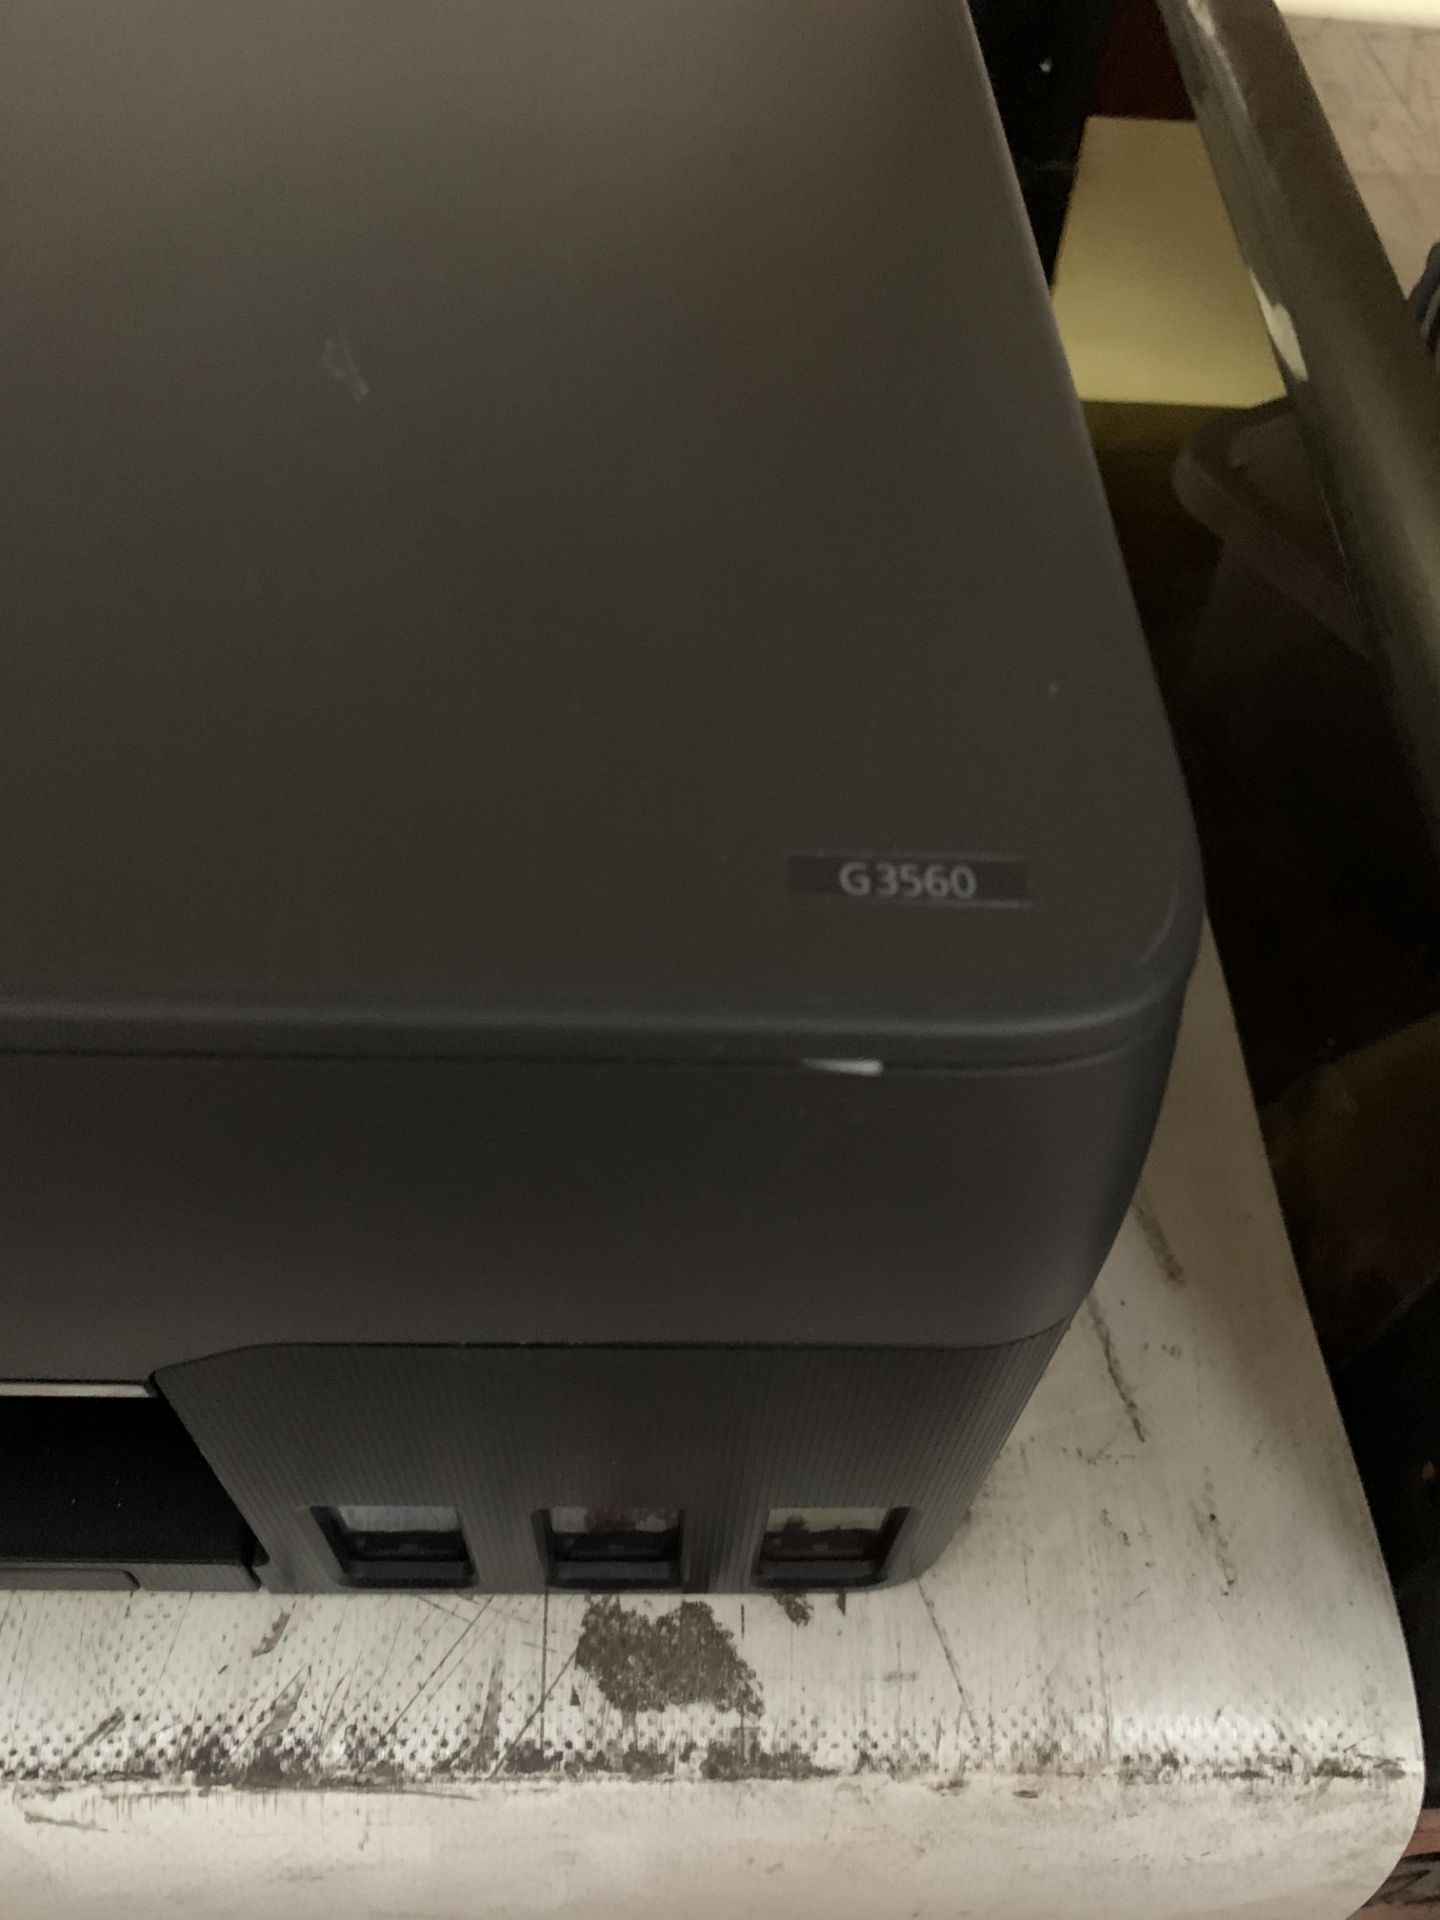 Canon G3560 printer - Image 3 of 3